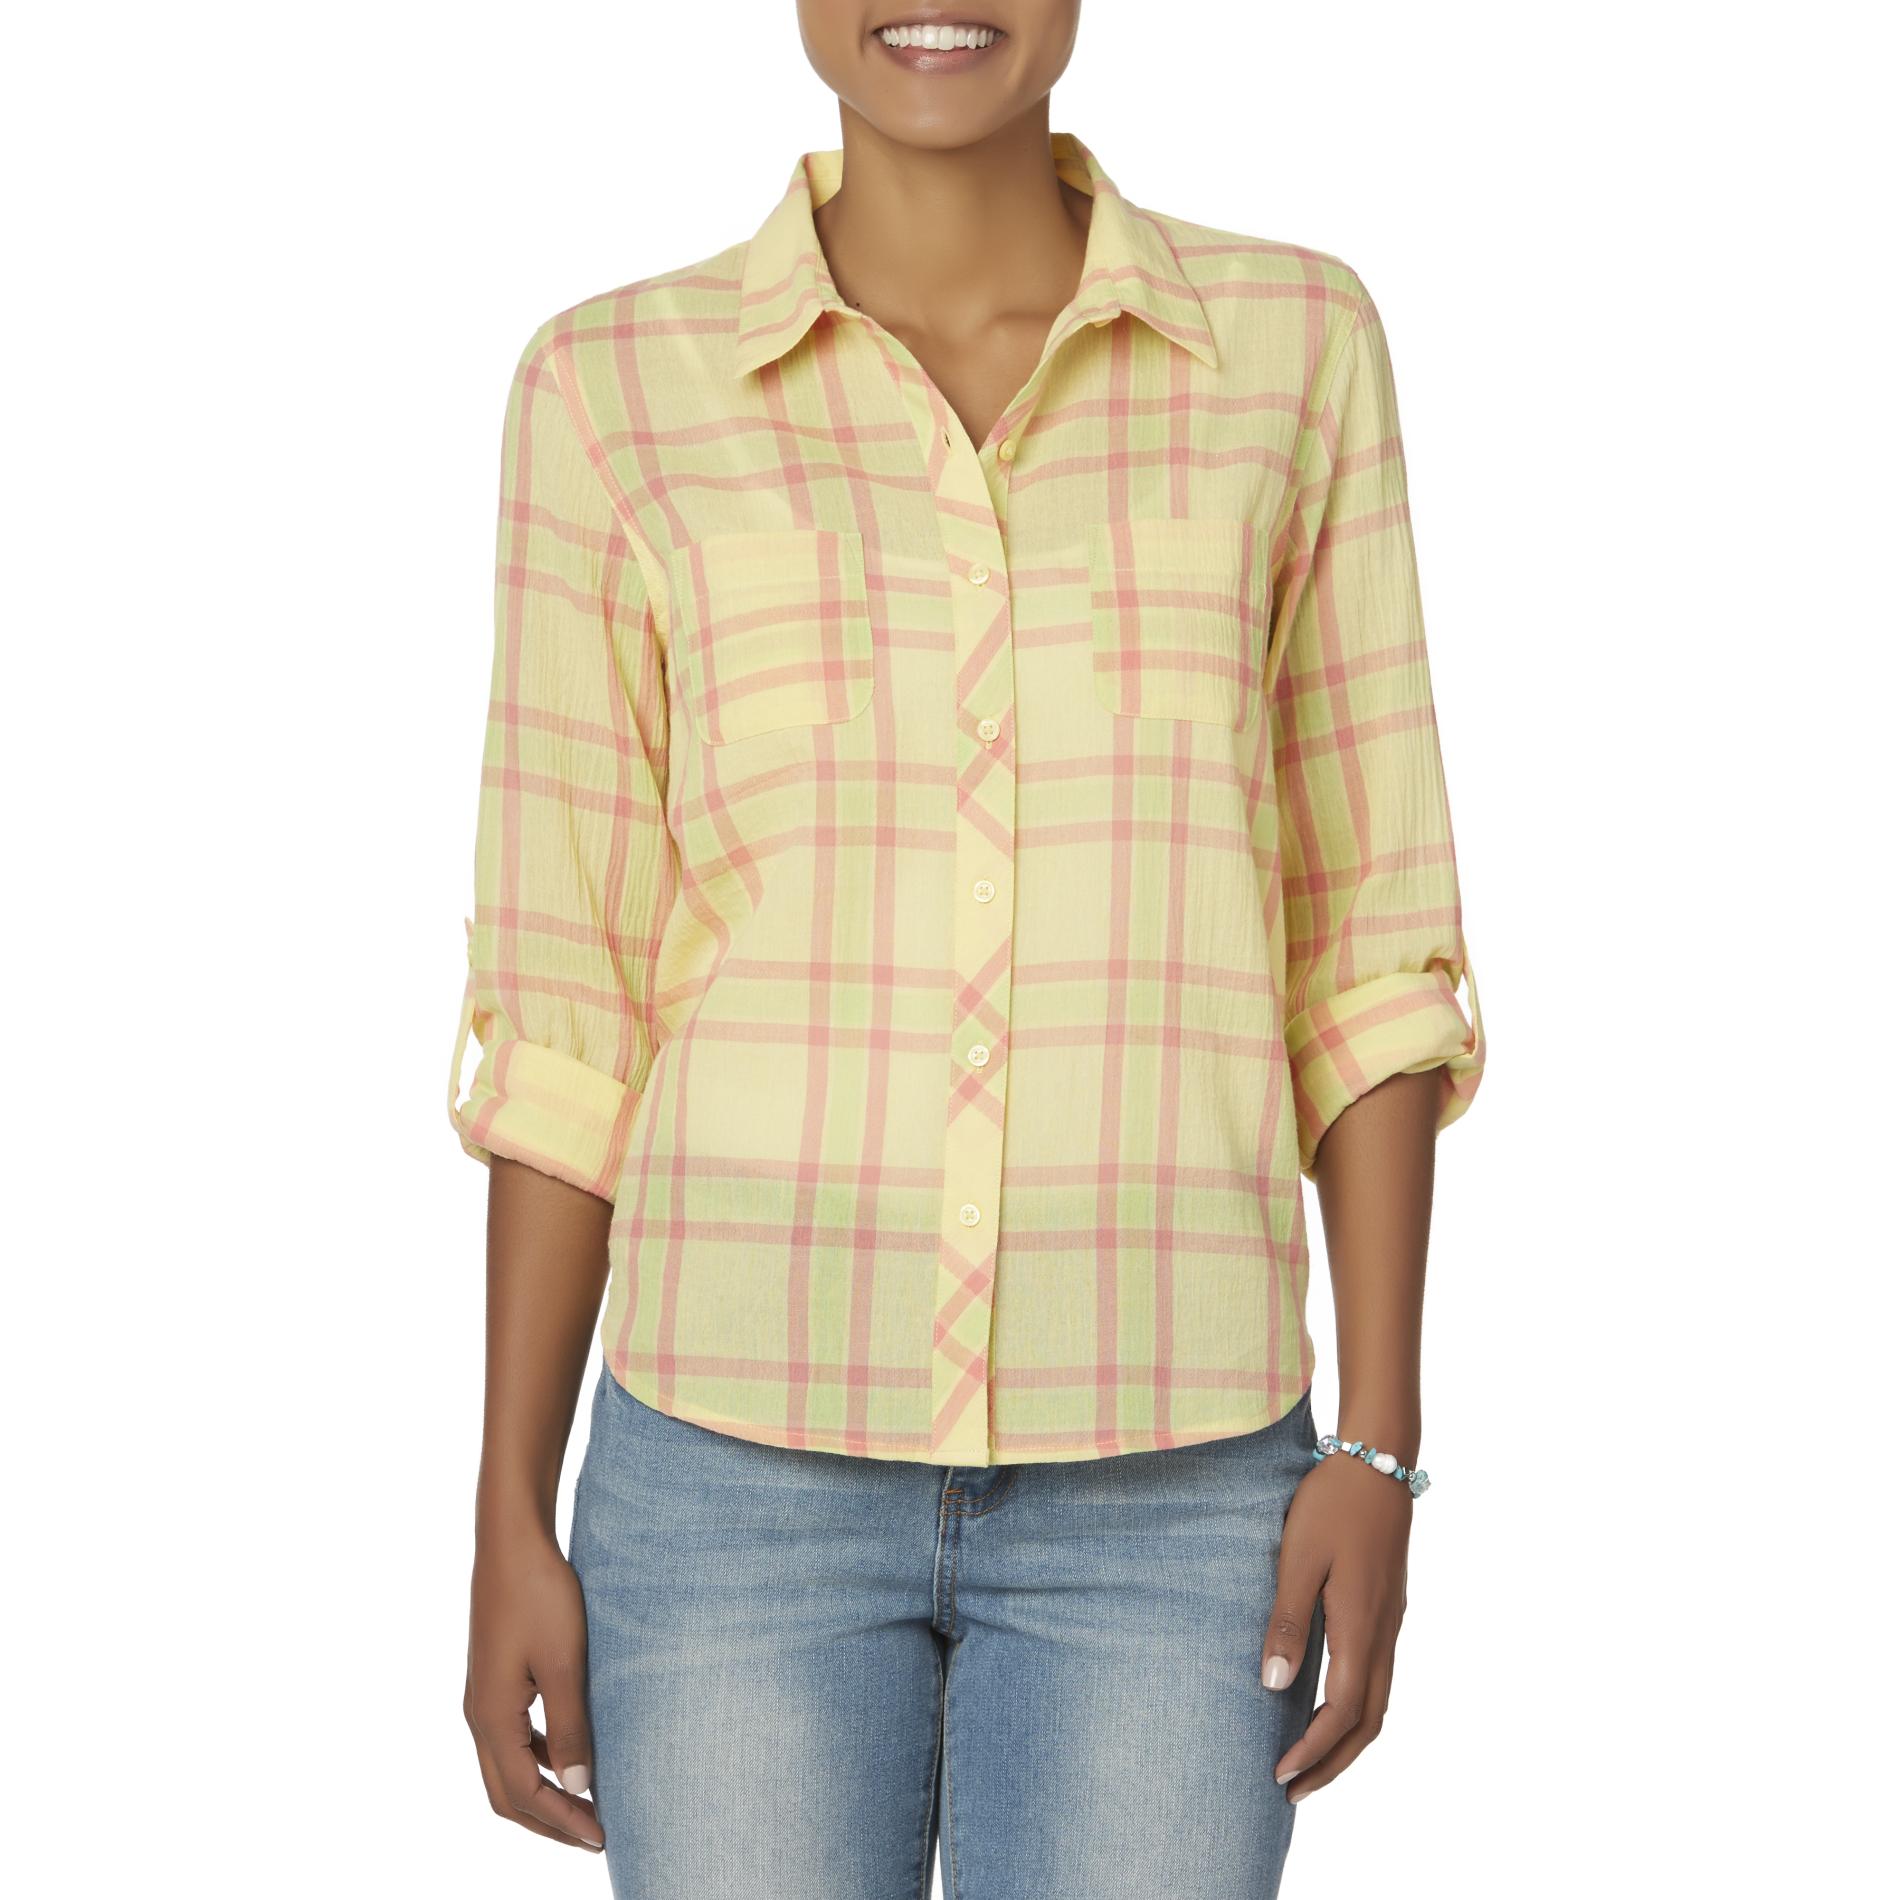 Basic Editions Women's Button-Front Shirt - Plaid